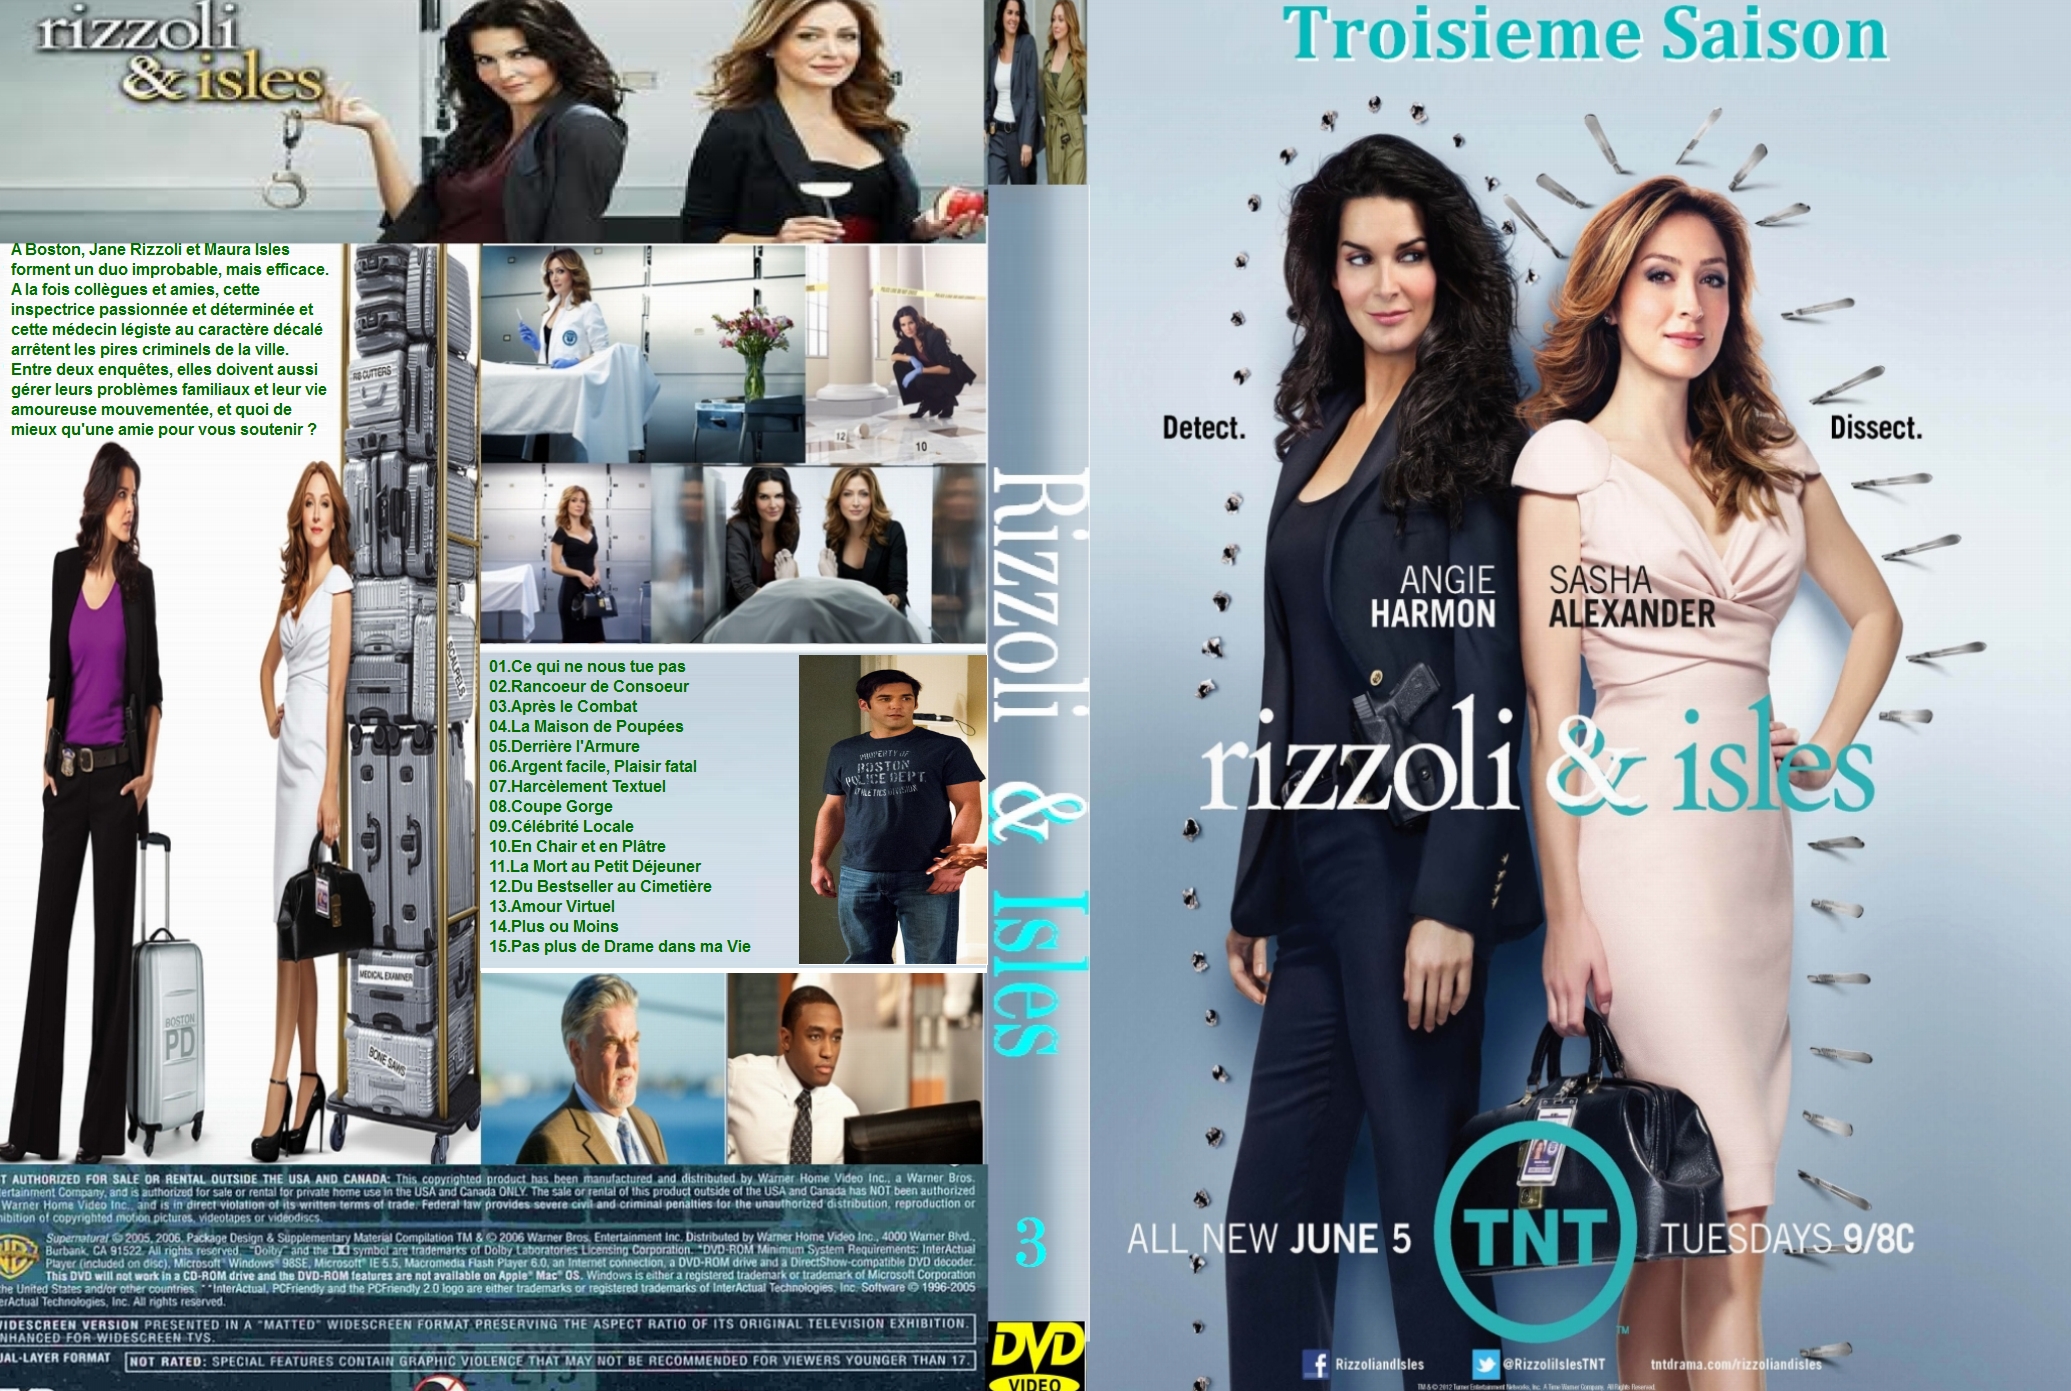 Jaquette DVD Rizzoli & Isles Saison 3 custom